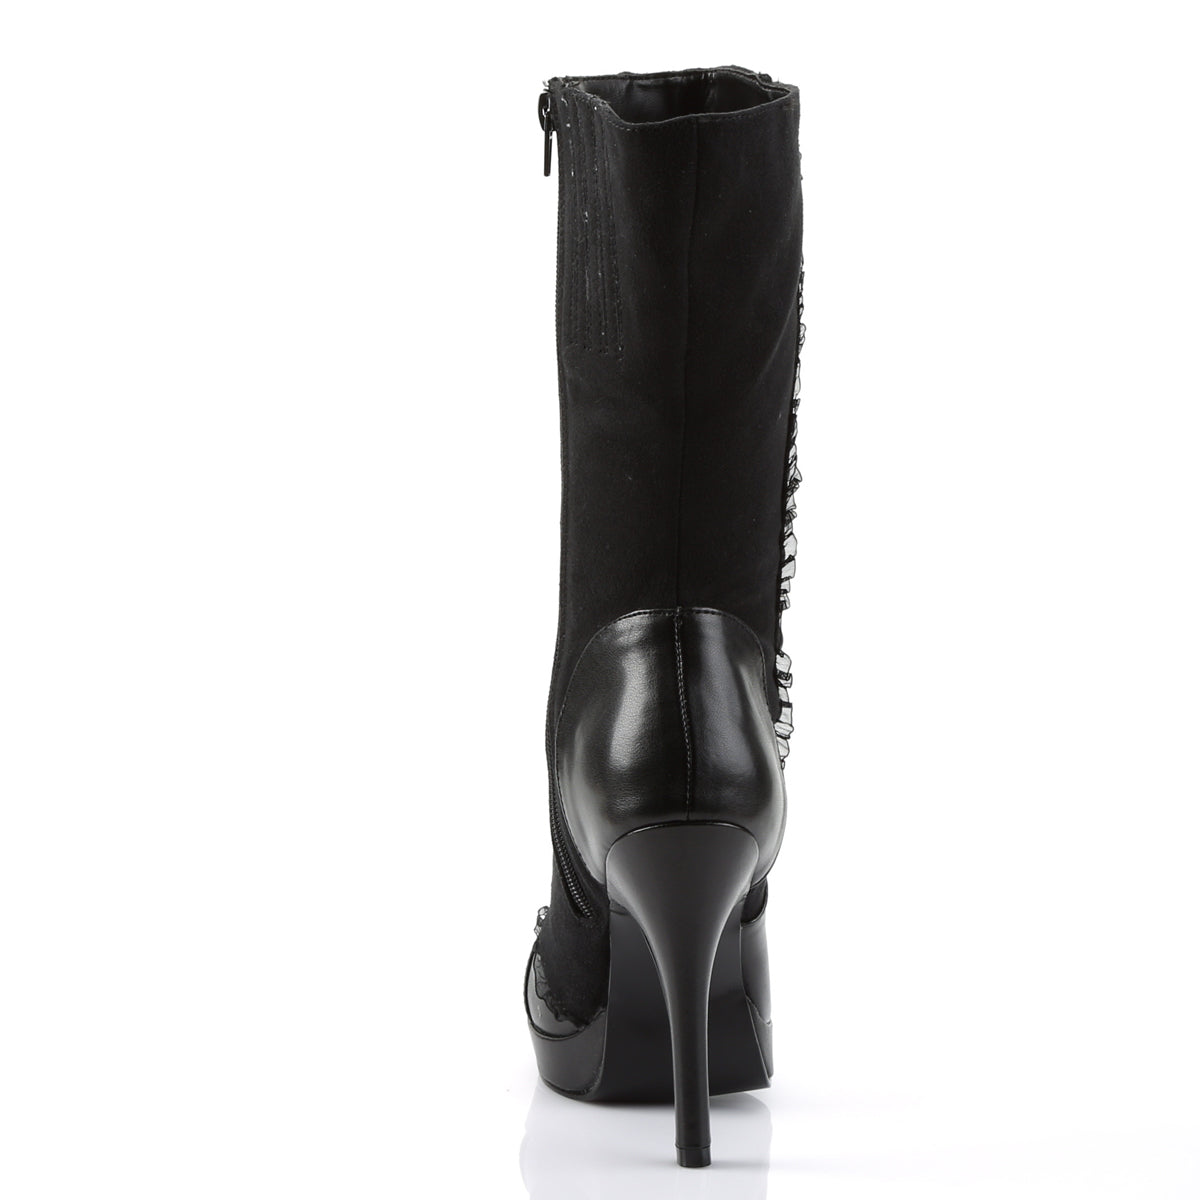 SPLENDOR-130 Retro 4.5" Heel Black Microfiber Women Boots Funtasma Costume Shoes Footwear